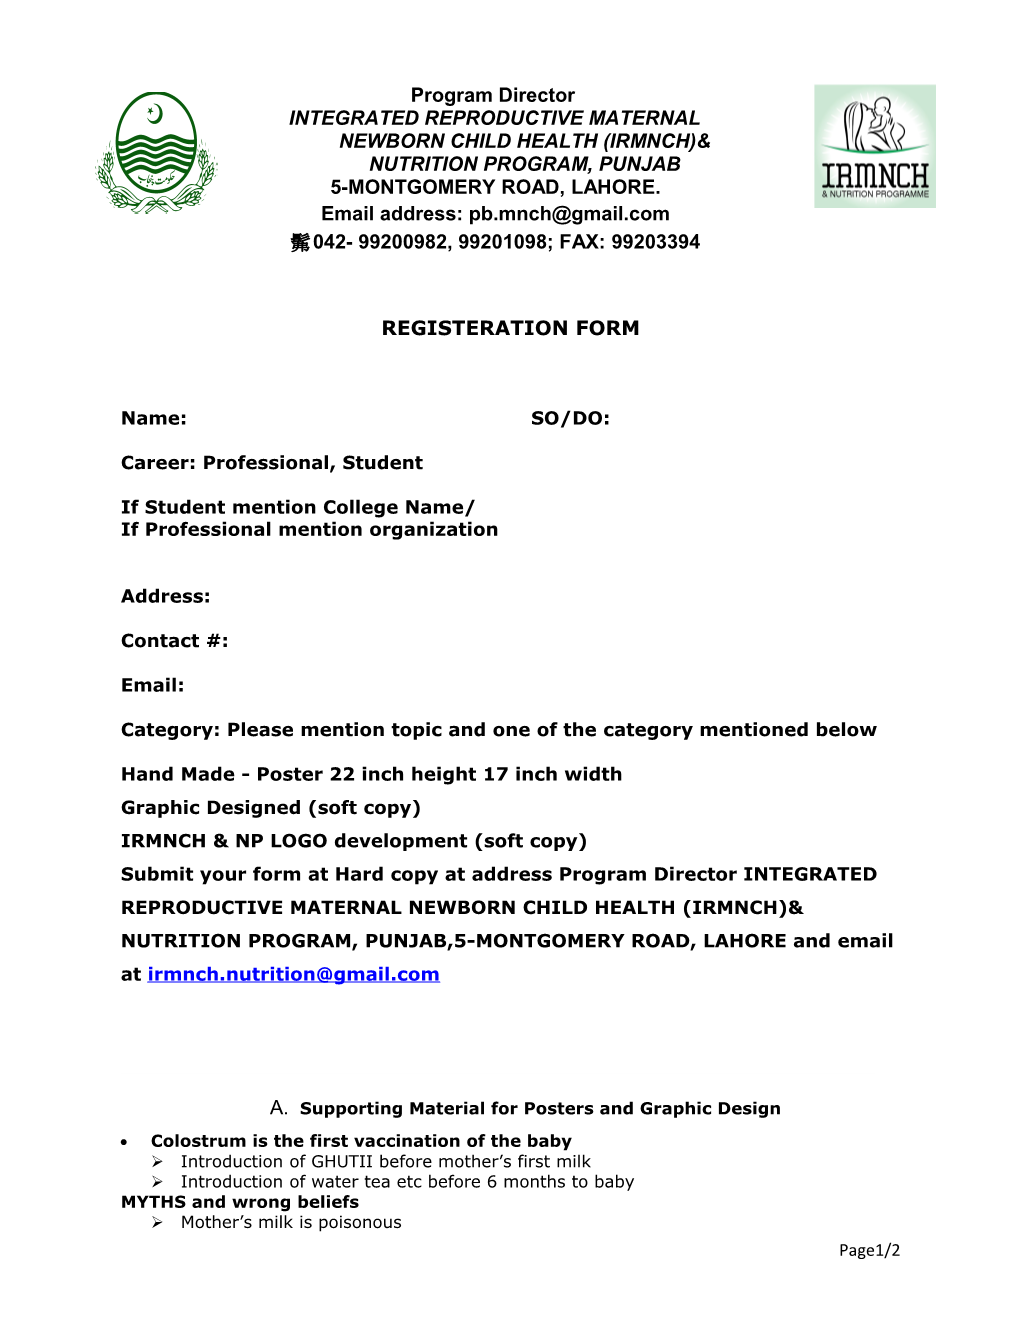 Integrated Reproductive Maternal Newborn Child Health (Irmnch)& Nutrition Program, Punjab